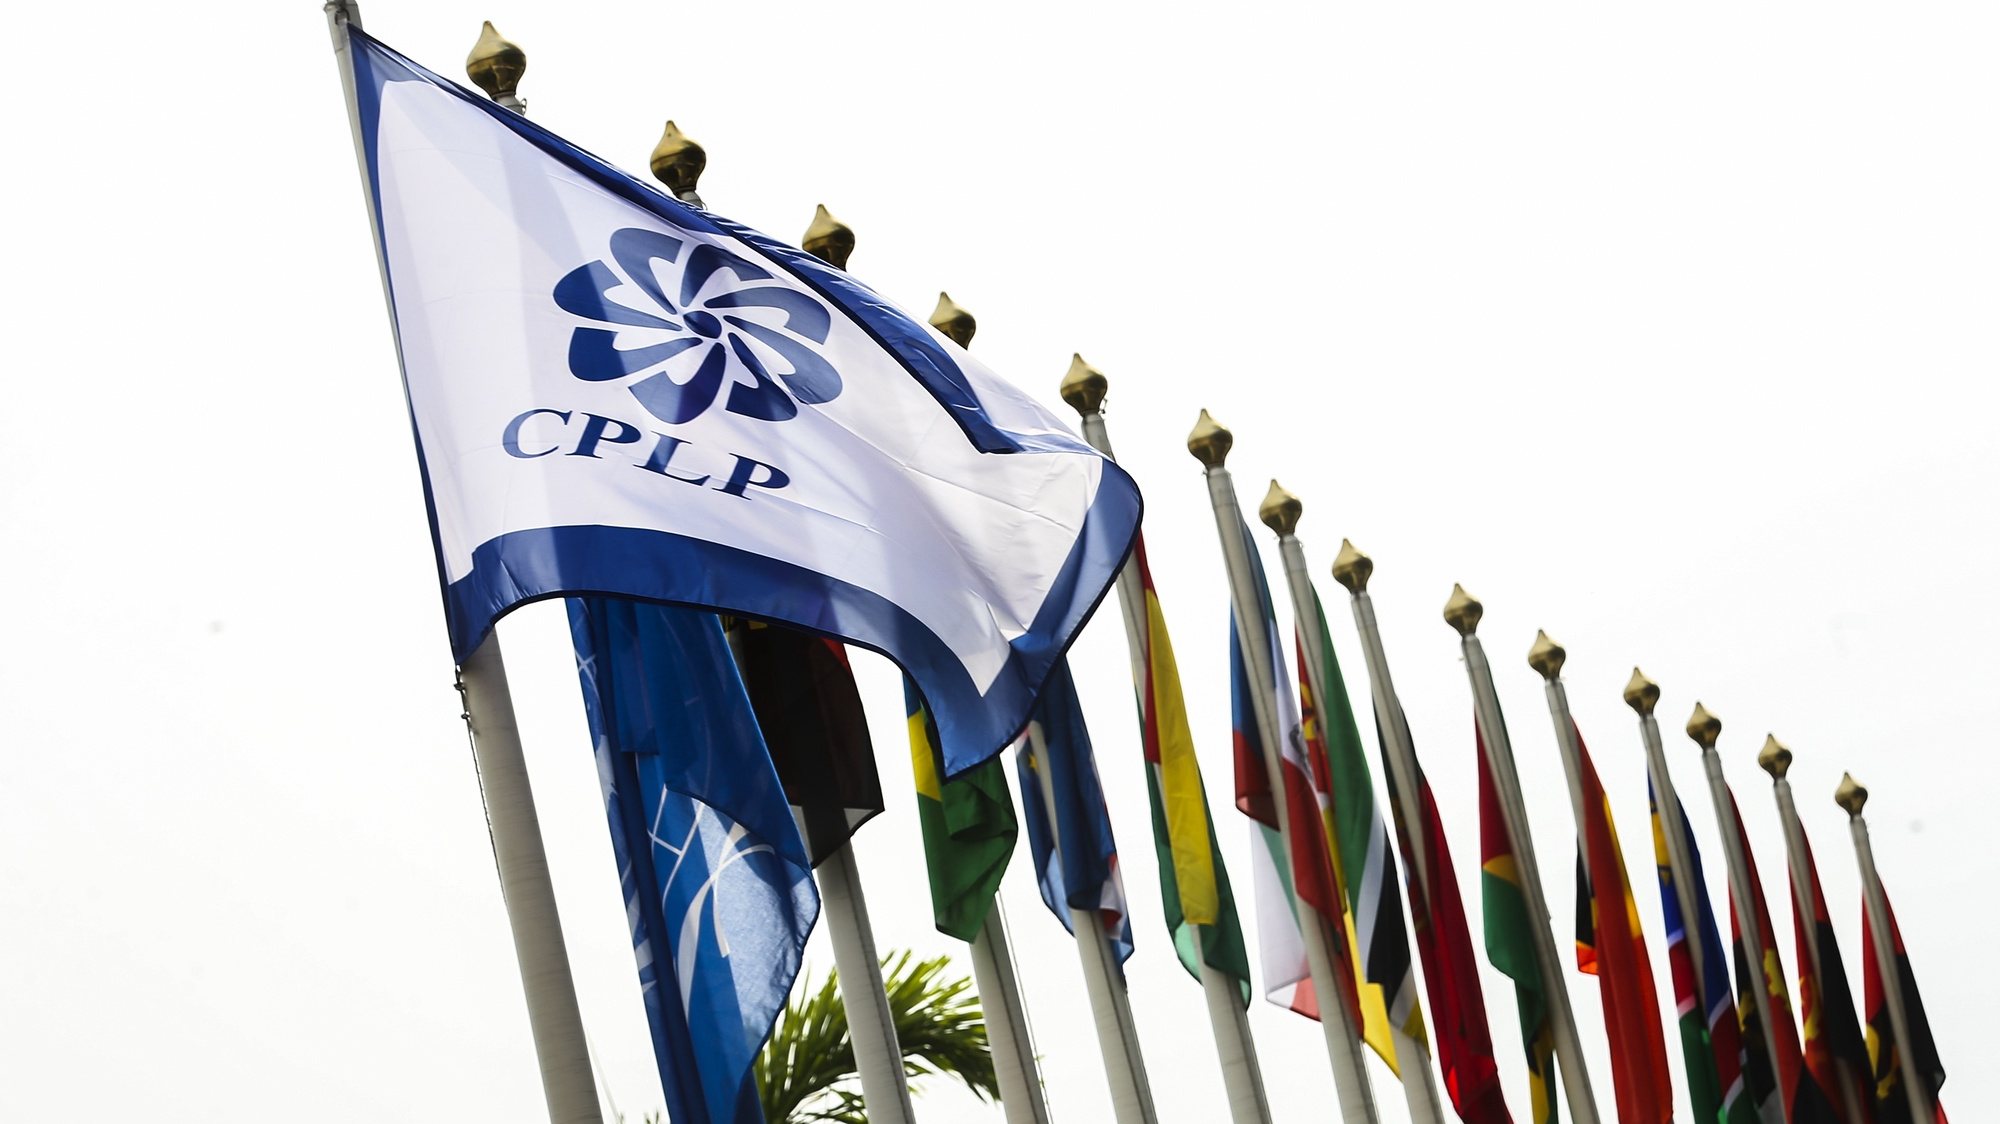 Bandeiras dos países participantes hasteadas no local aonde se realiza a XIII Conferência de Chefes de Estado e de Governo da Comunidade dos Países de Língua Portuguesa (CPLP), em Luanda, Angola, 17 de julho de 2021. AMPE ROGÉRIO/LUSA